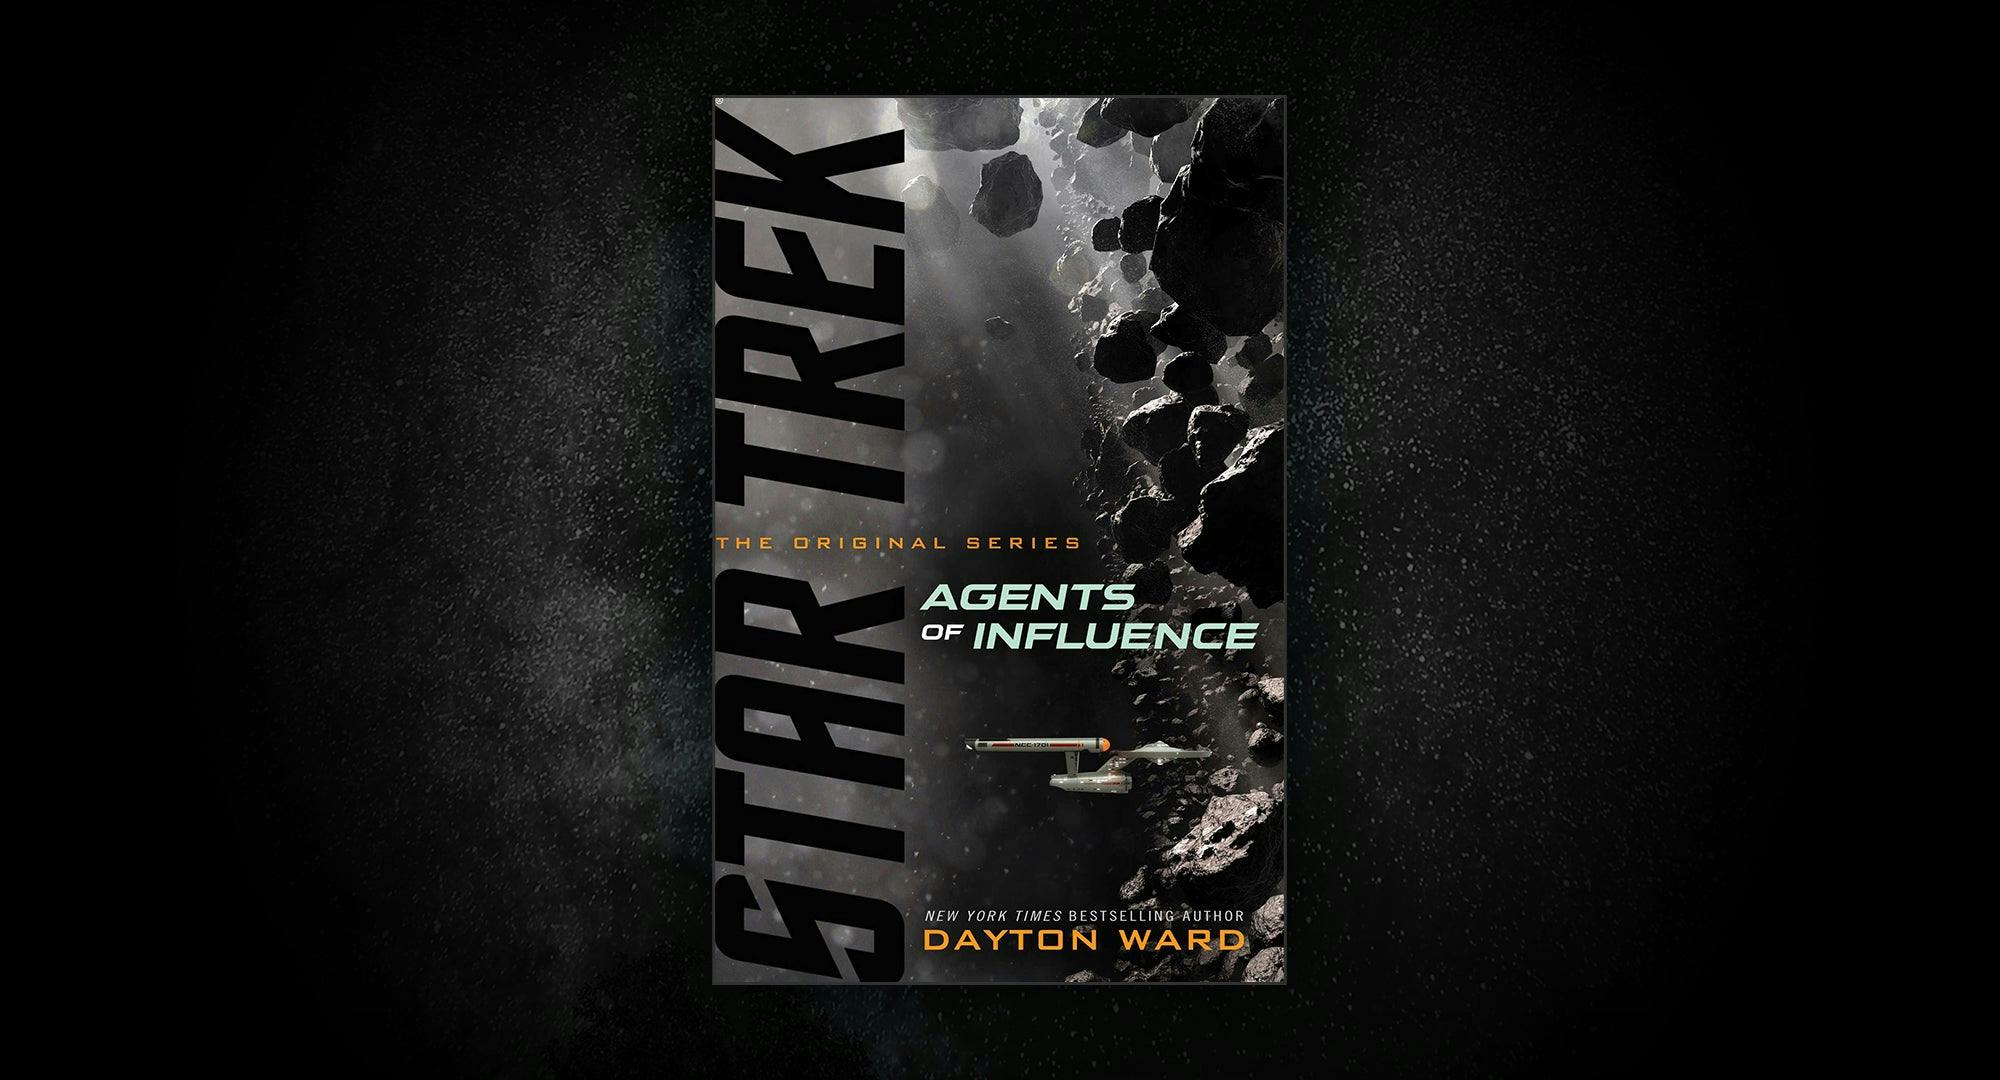 Star Trek: The Original Series: Agents of Influence - Dayton Ward